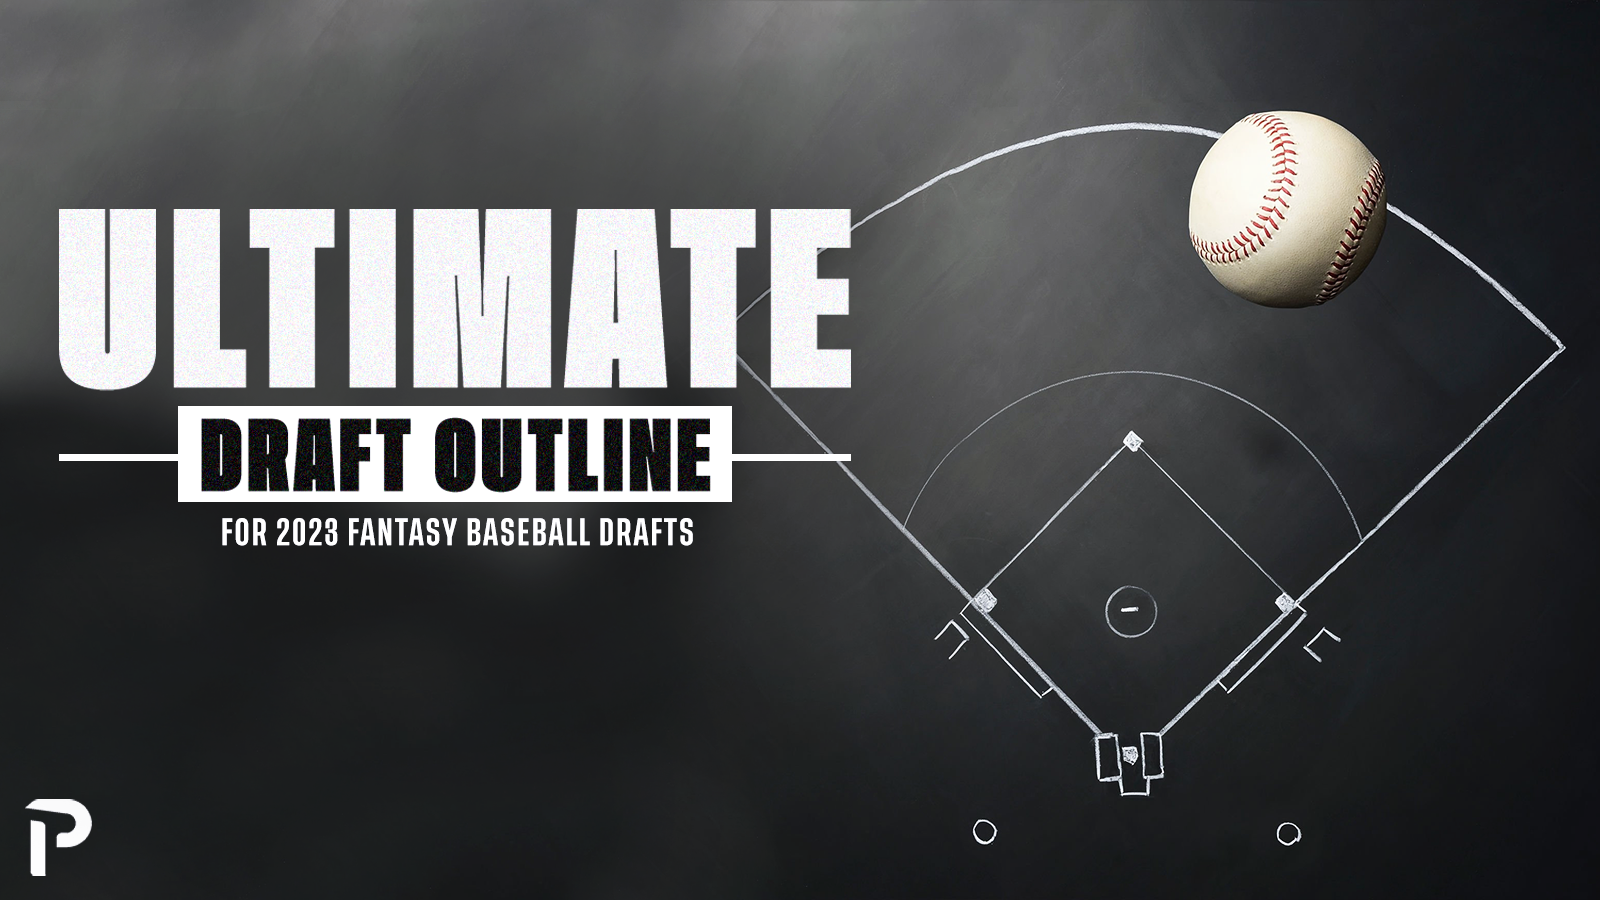 Top 20 Shortstops for 2022 Fantasy Baseball - Razzball Fantasy Baseball